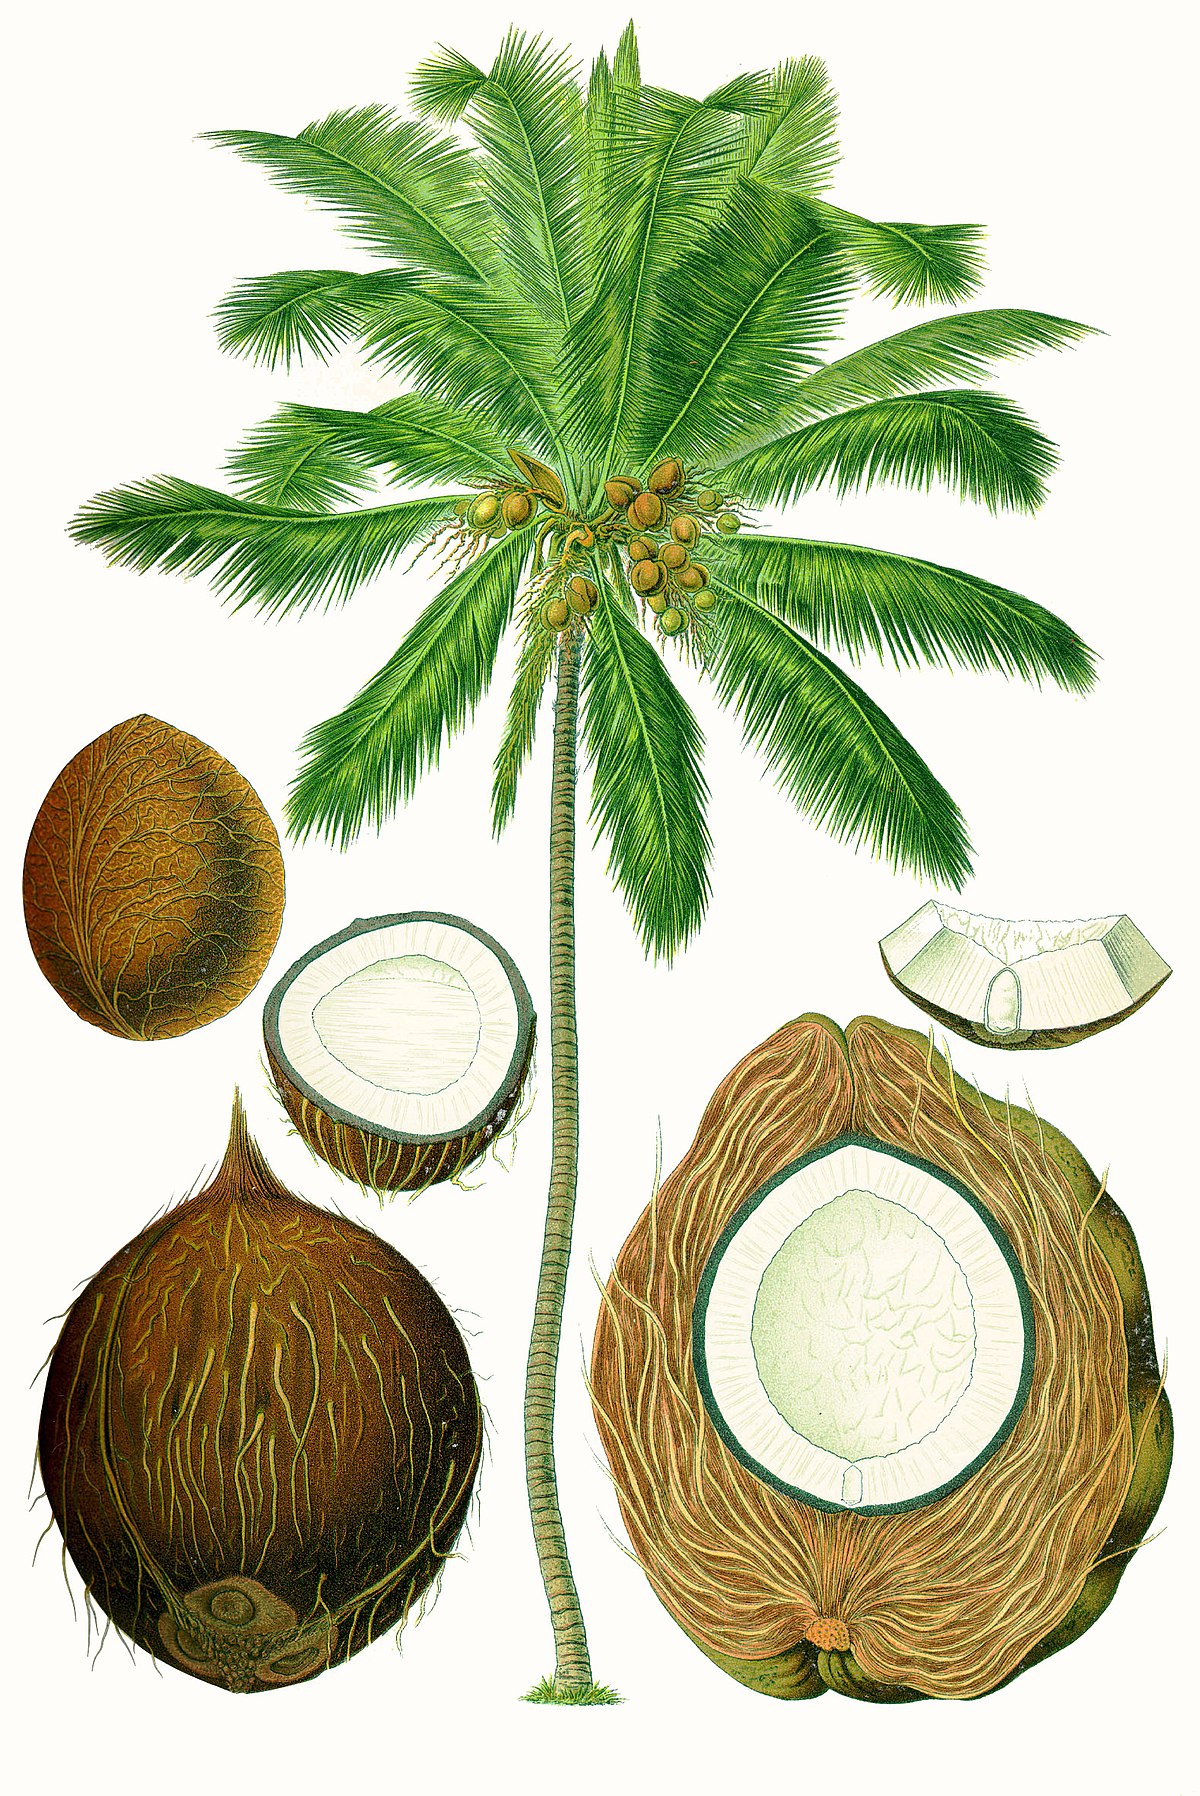 (c) Coconutseller.in